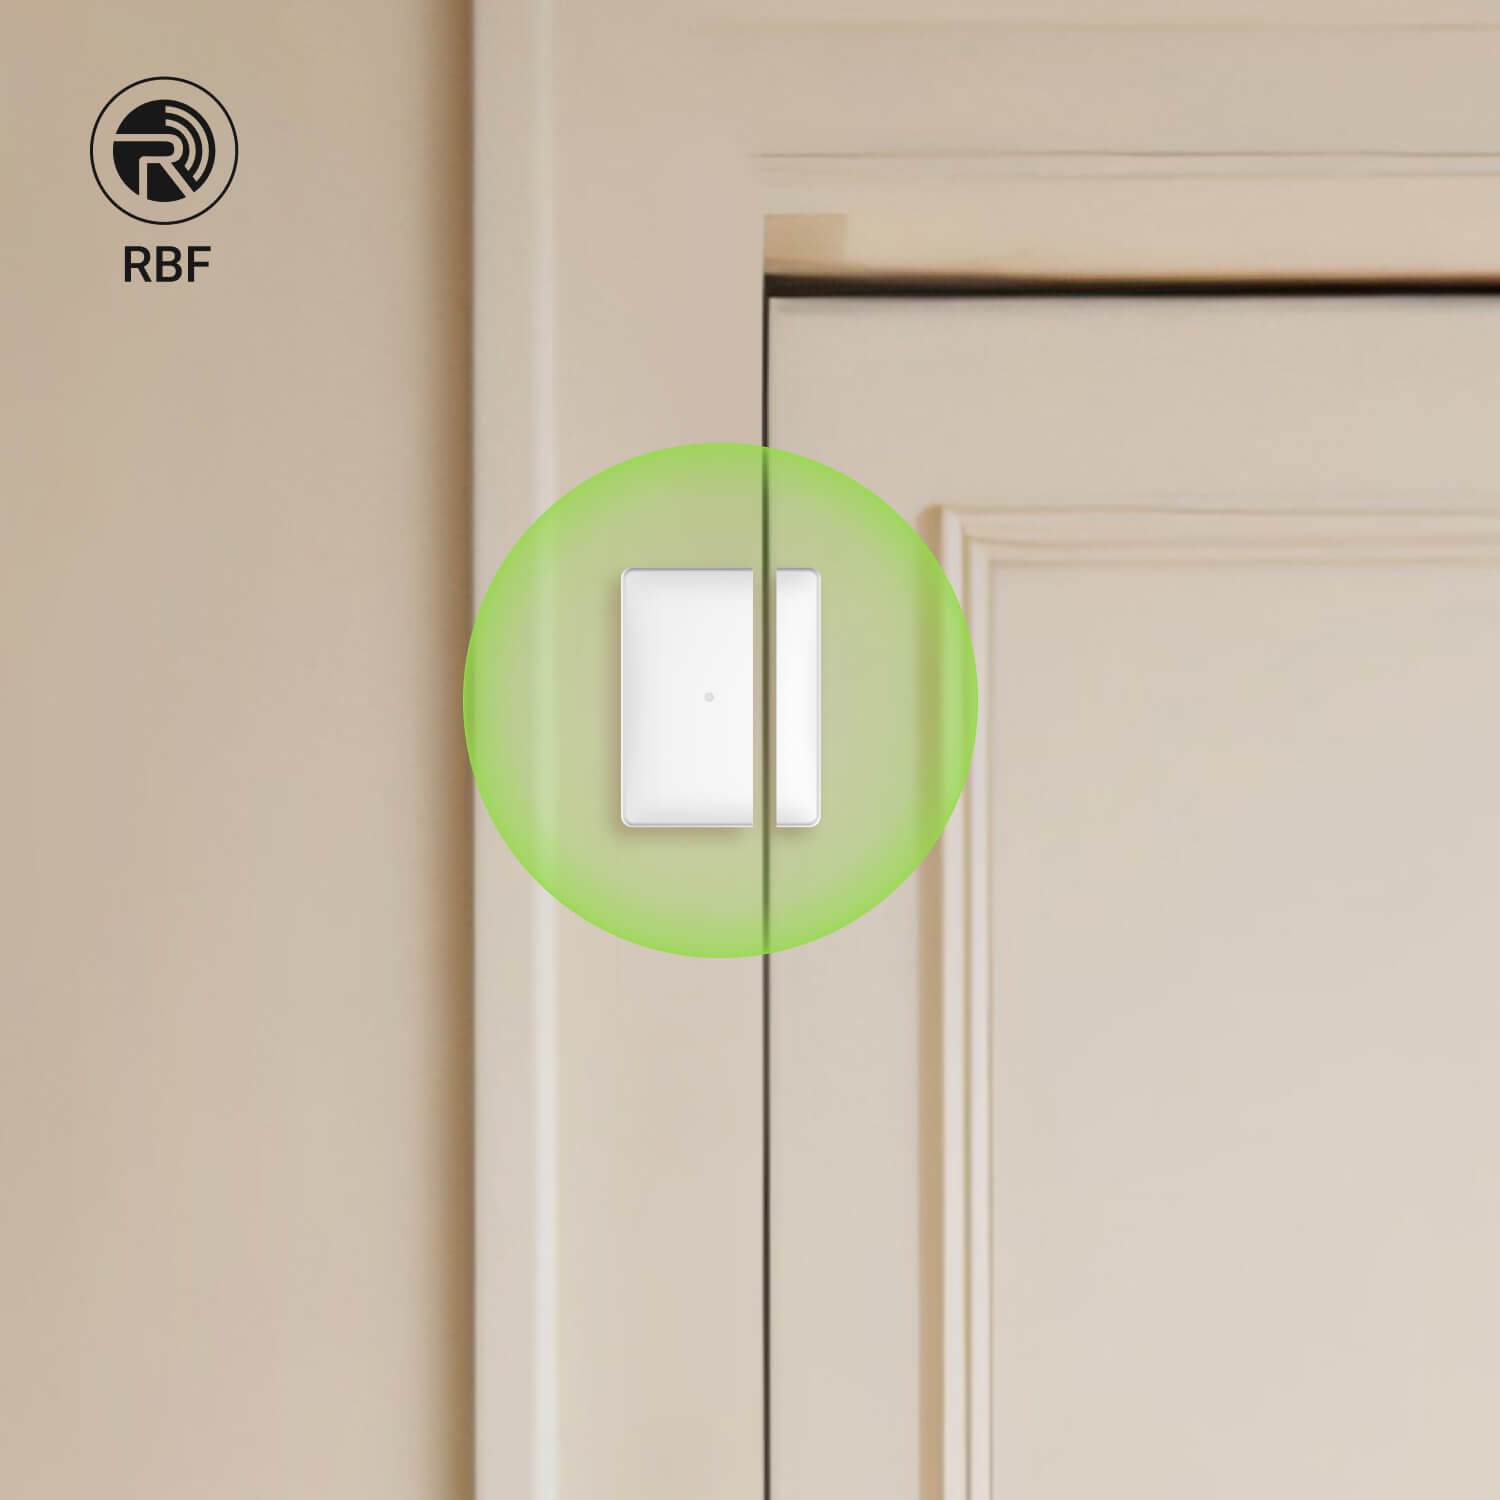 Door Magnetic Sensor - Remote Monitoring & Easy Installation - Requires Roombanker Hub